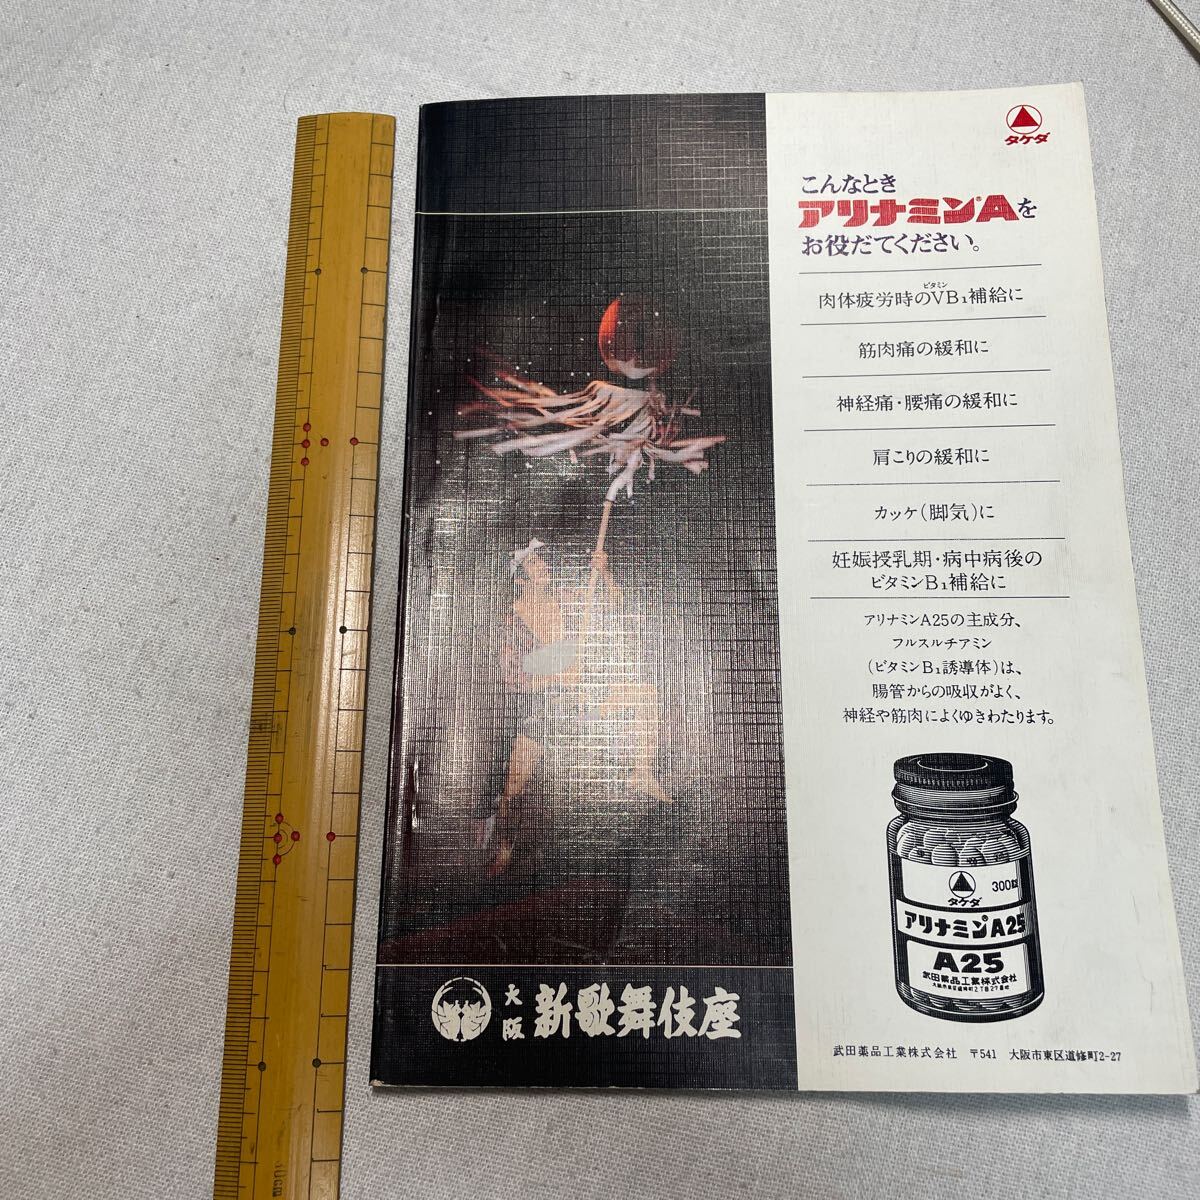  Osaka новый kabuki сиденье Kobayashi asahi специальный .. Showa 57 год 11 месяц журнал 